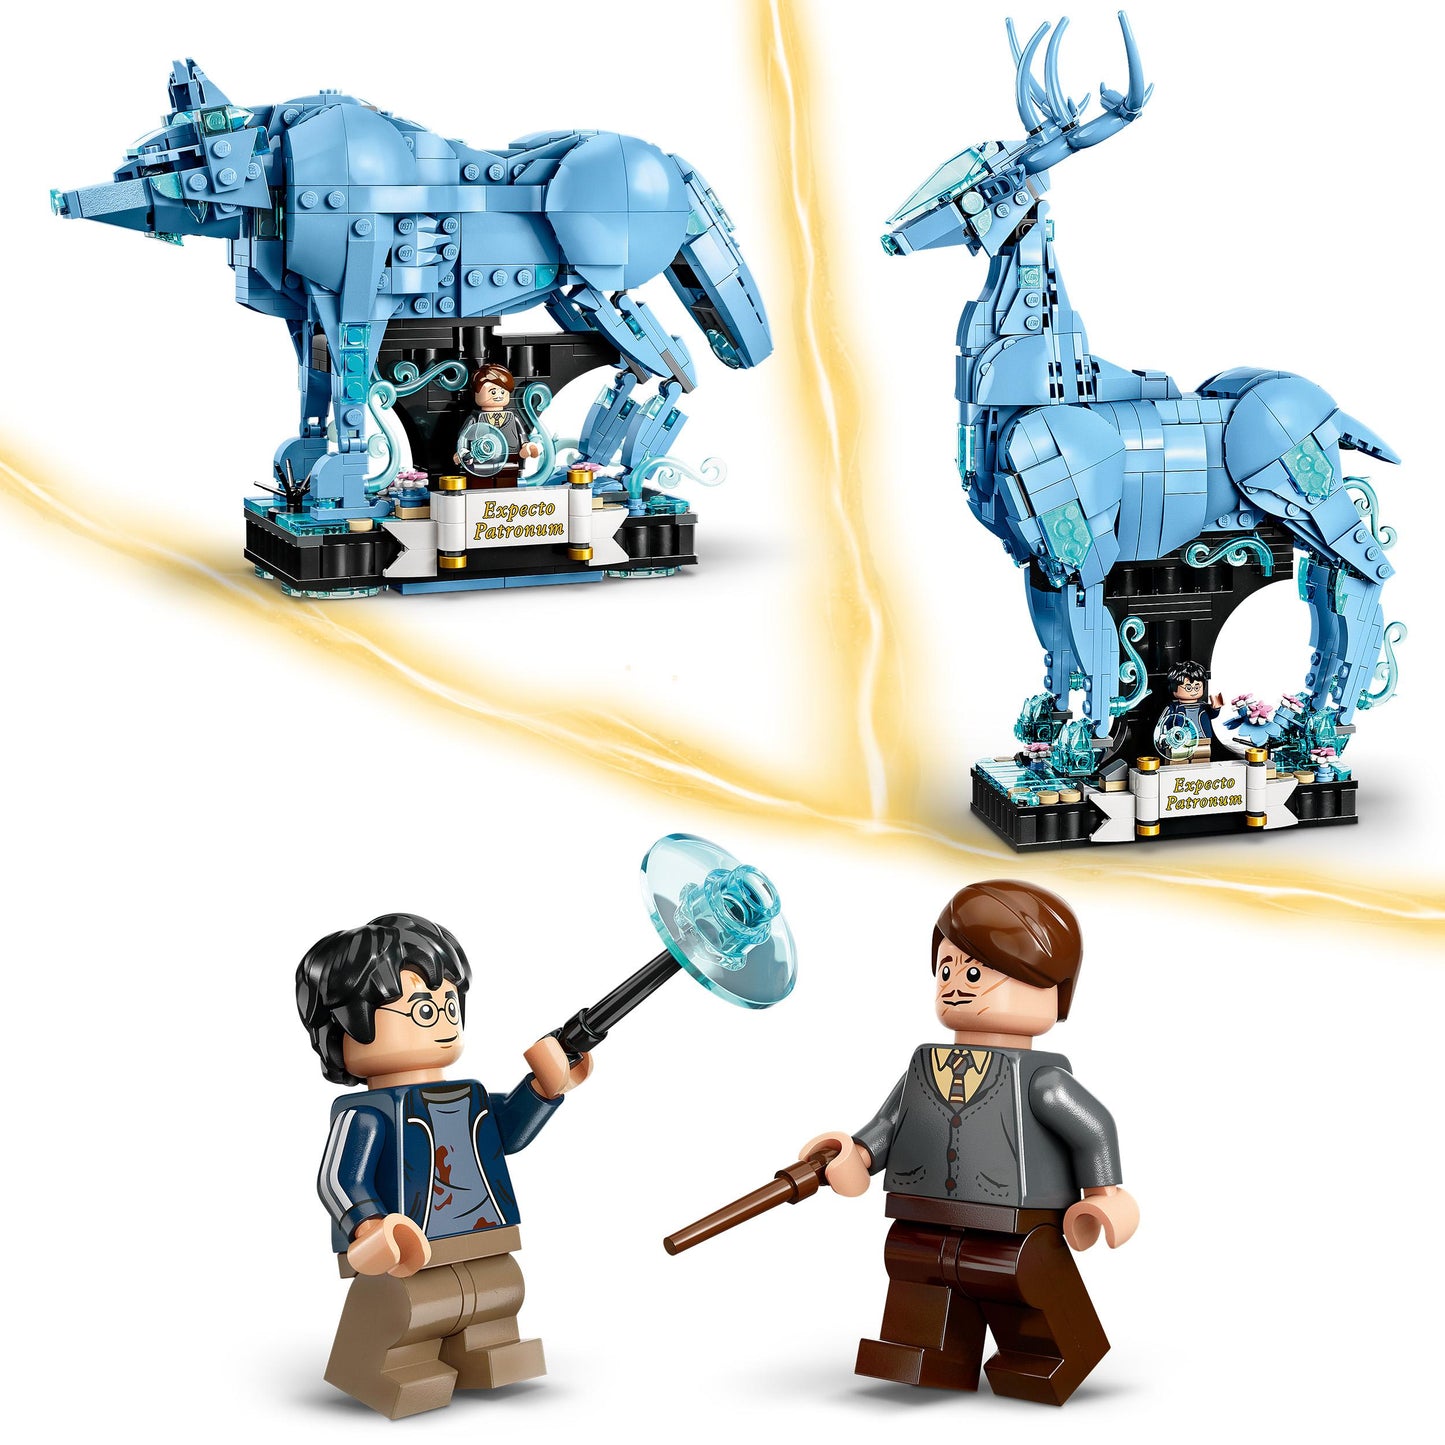 76414 LEGO Harry Potter - Expecto Patronum